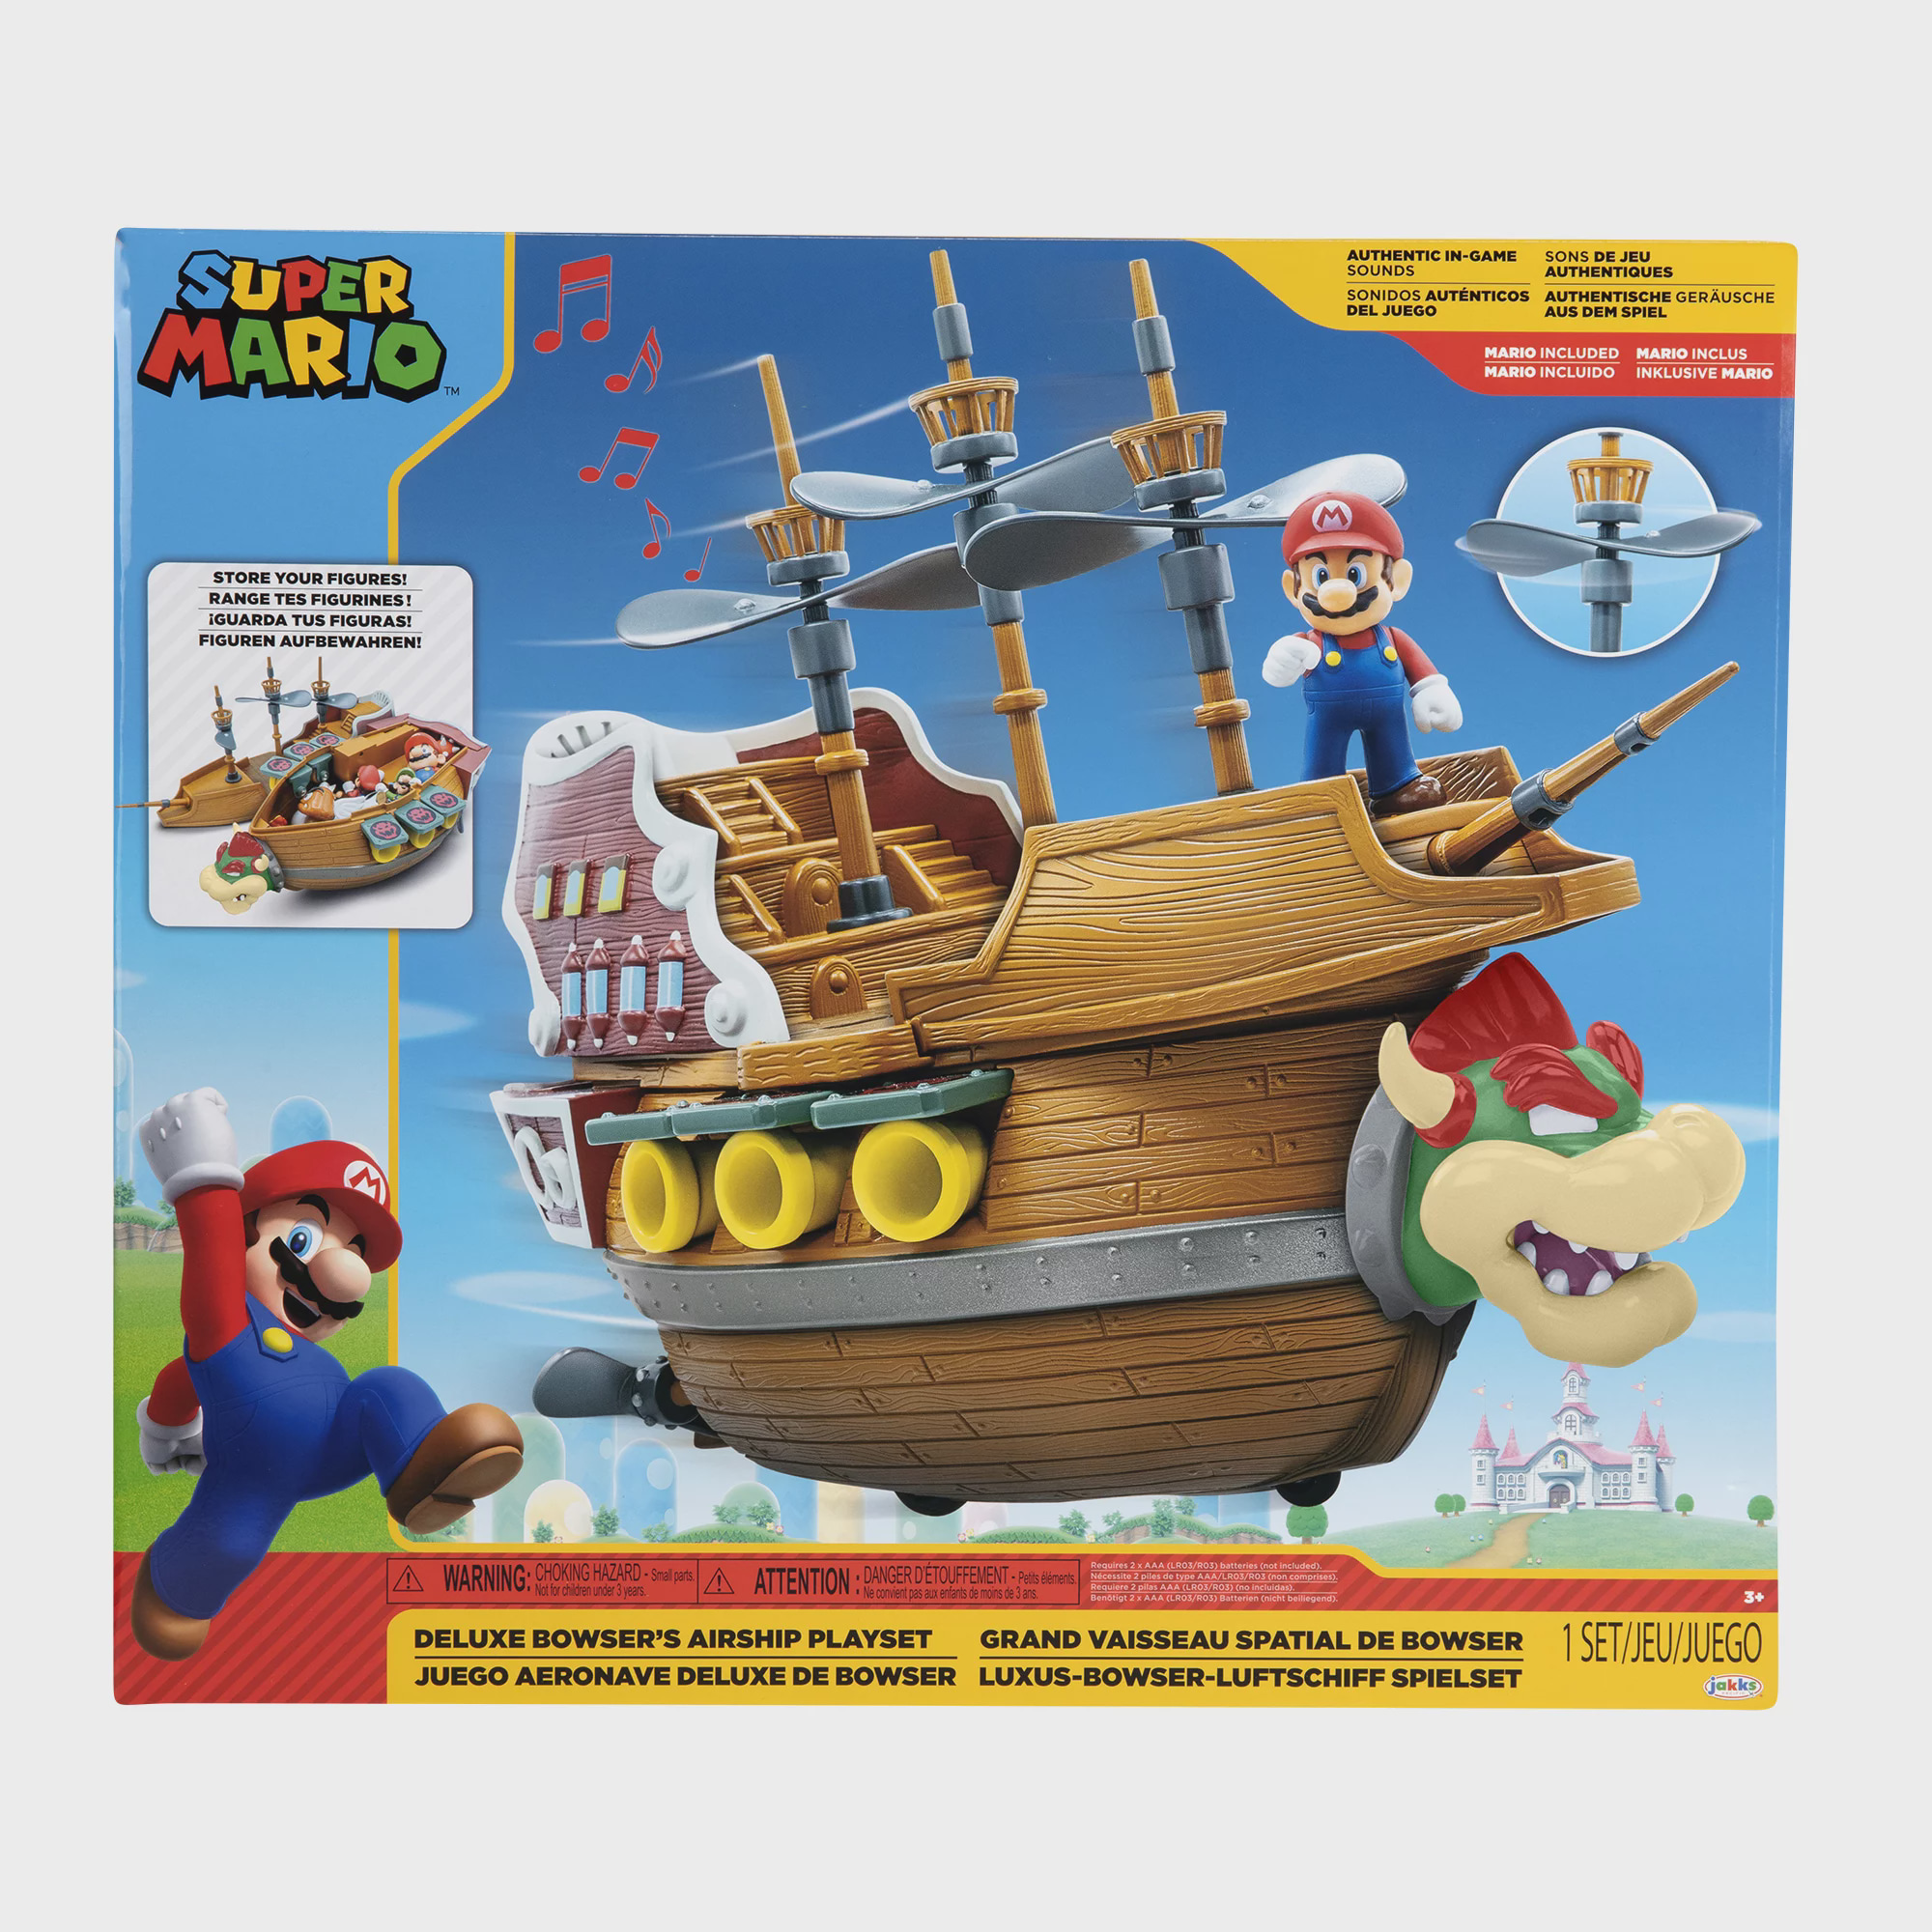 Super Mario Deluxe Bowser's Air Ship Playset - 42% off - Walmart.com $23.49